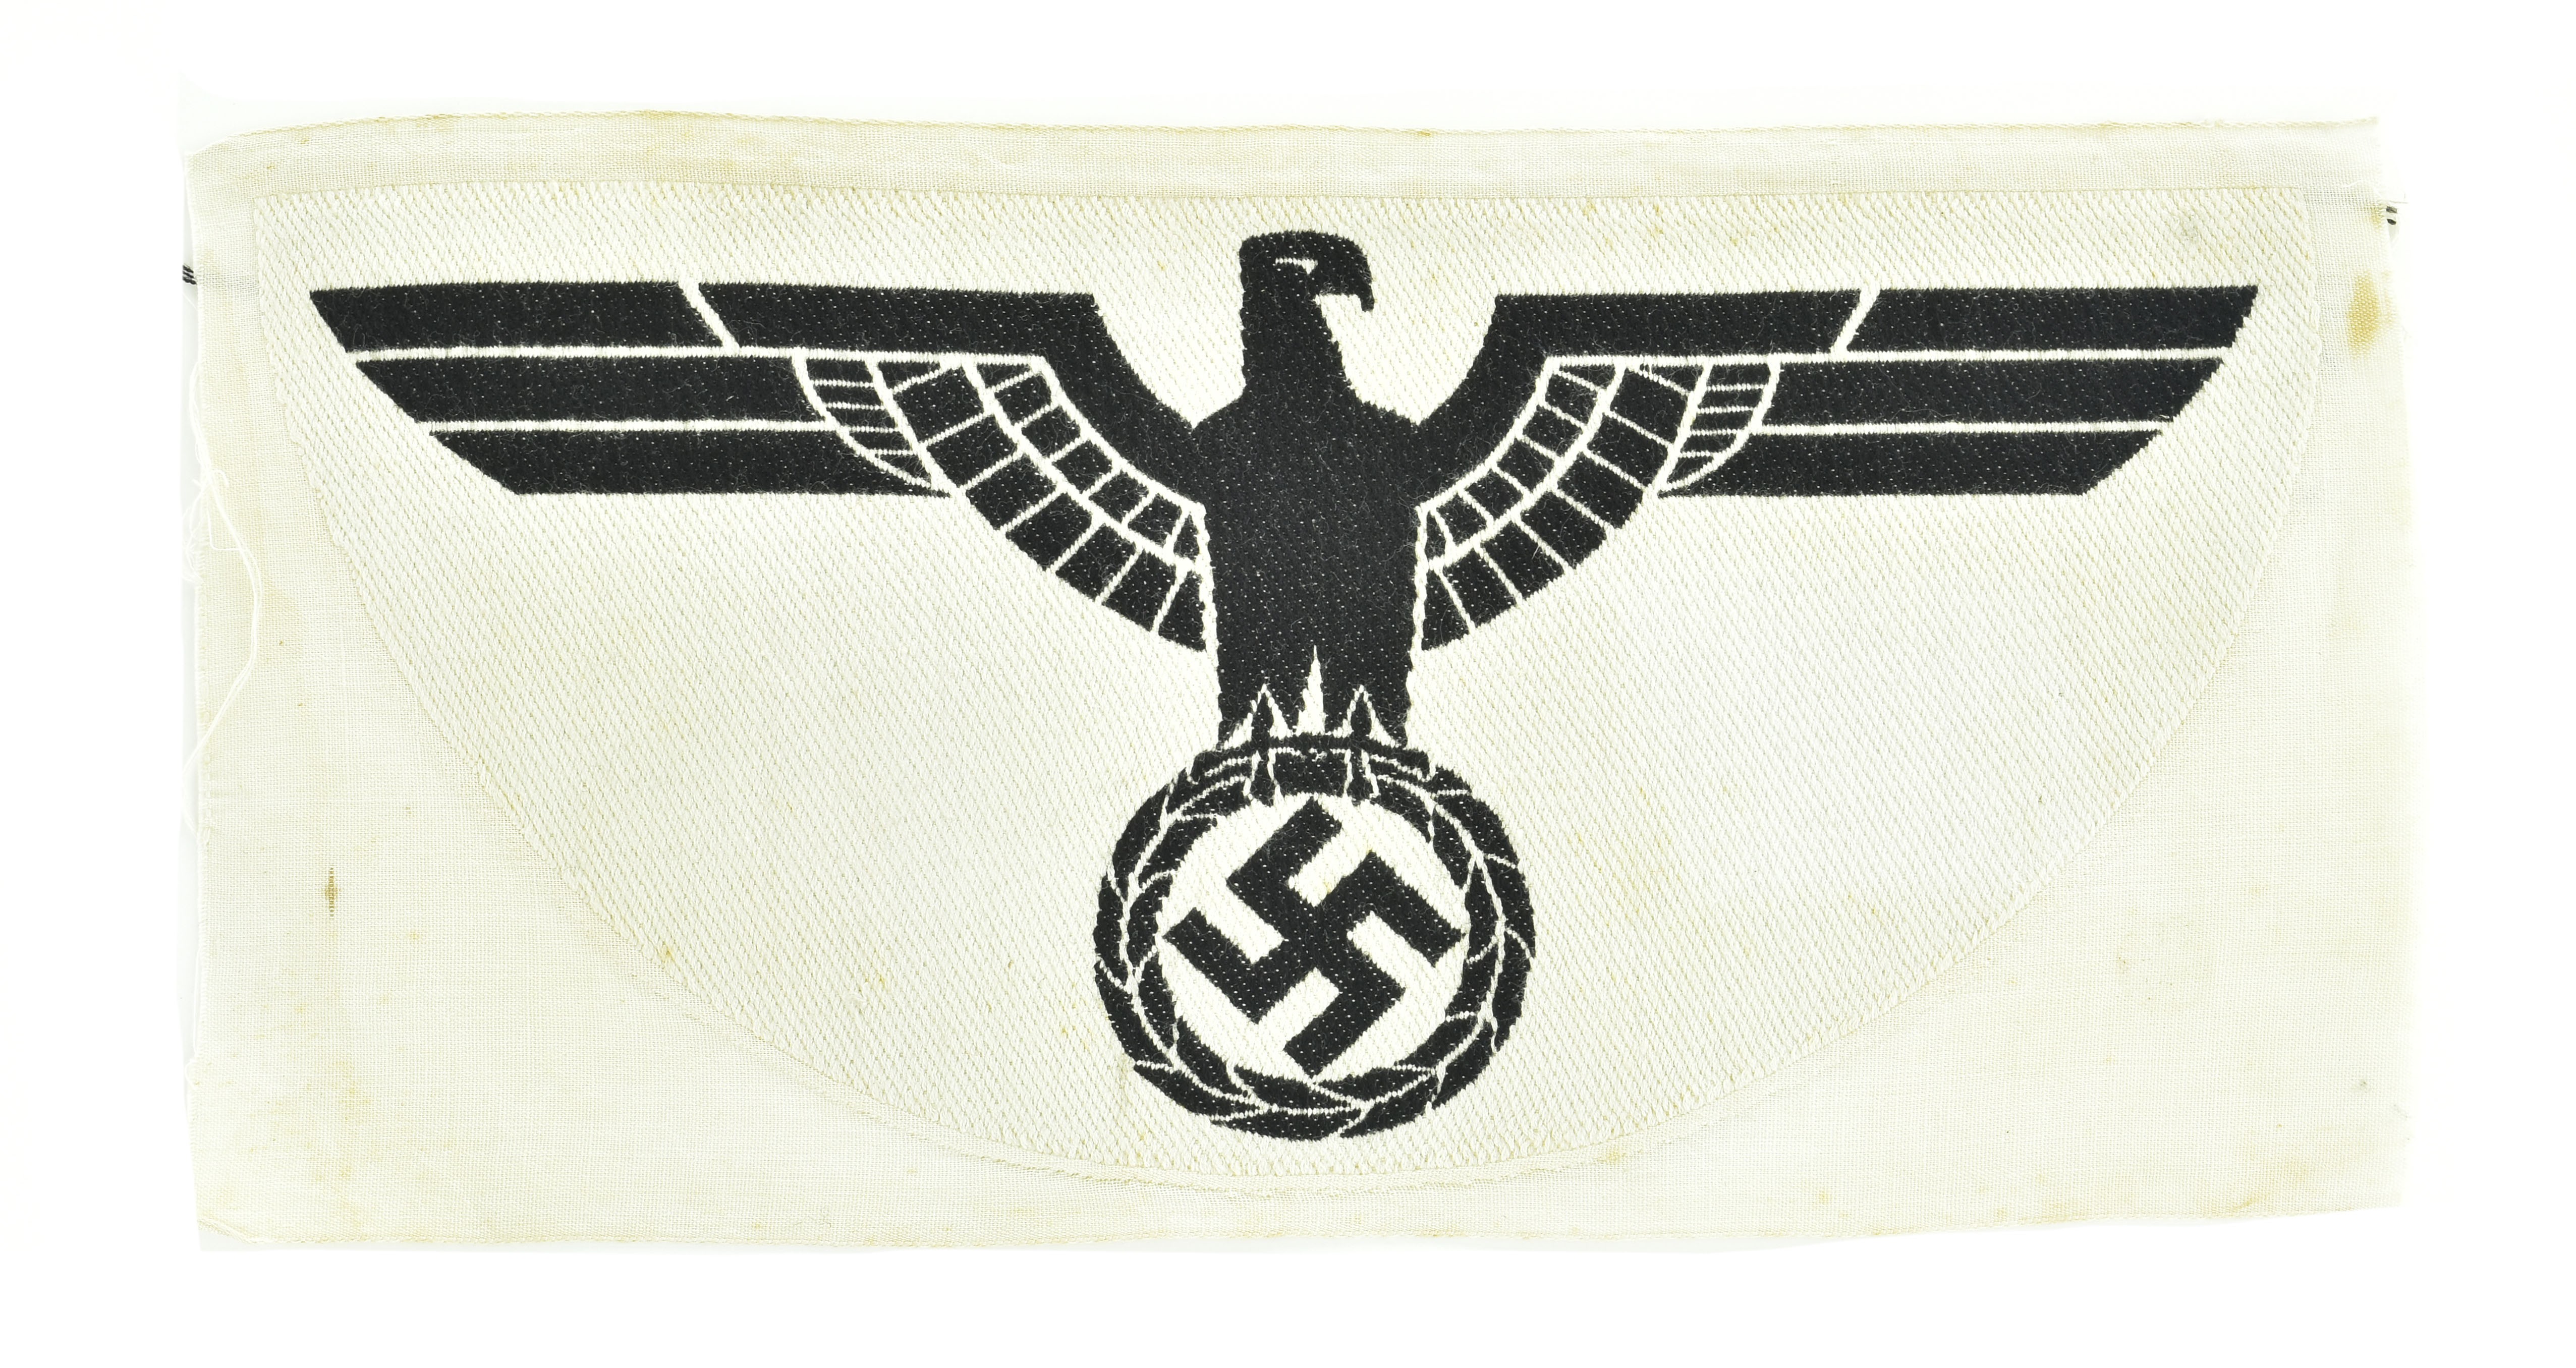 German Wehrmacht “Army” Sports Shirt Insignia (MM1211)